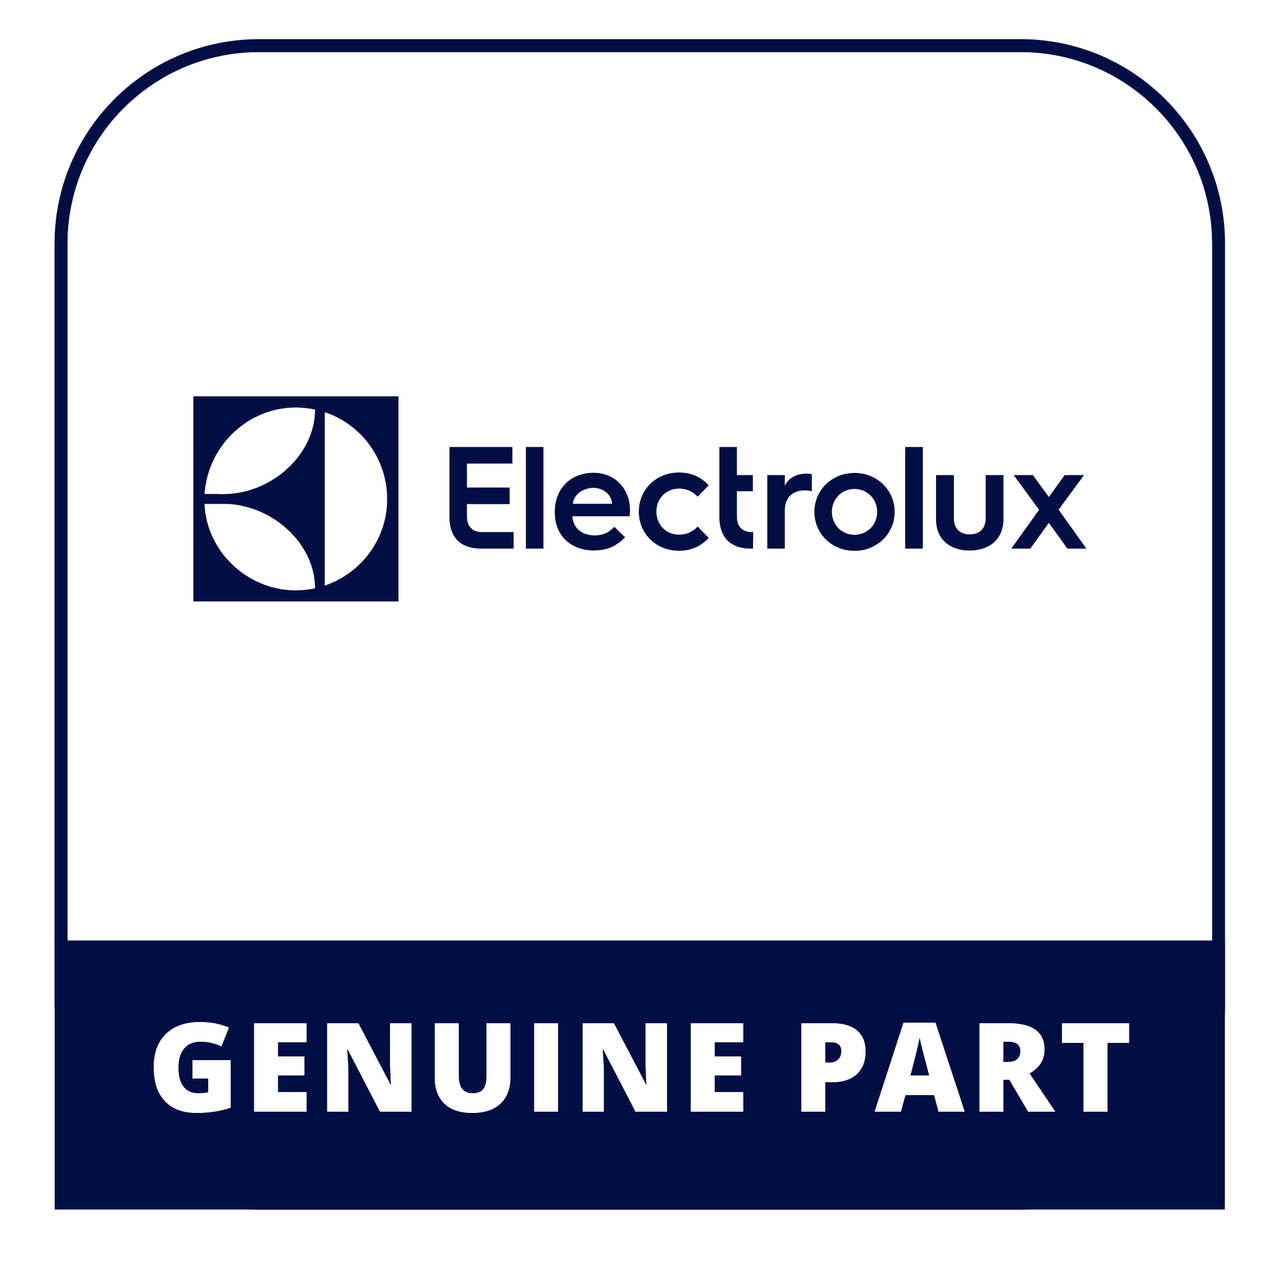 Frigidaire - Electrolux 137314510 - Frame - Genuine Electrolux Part